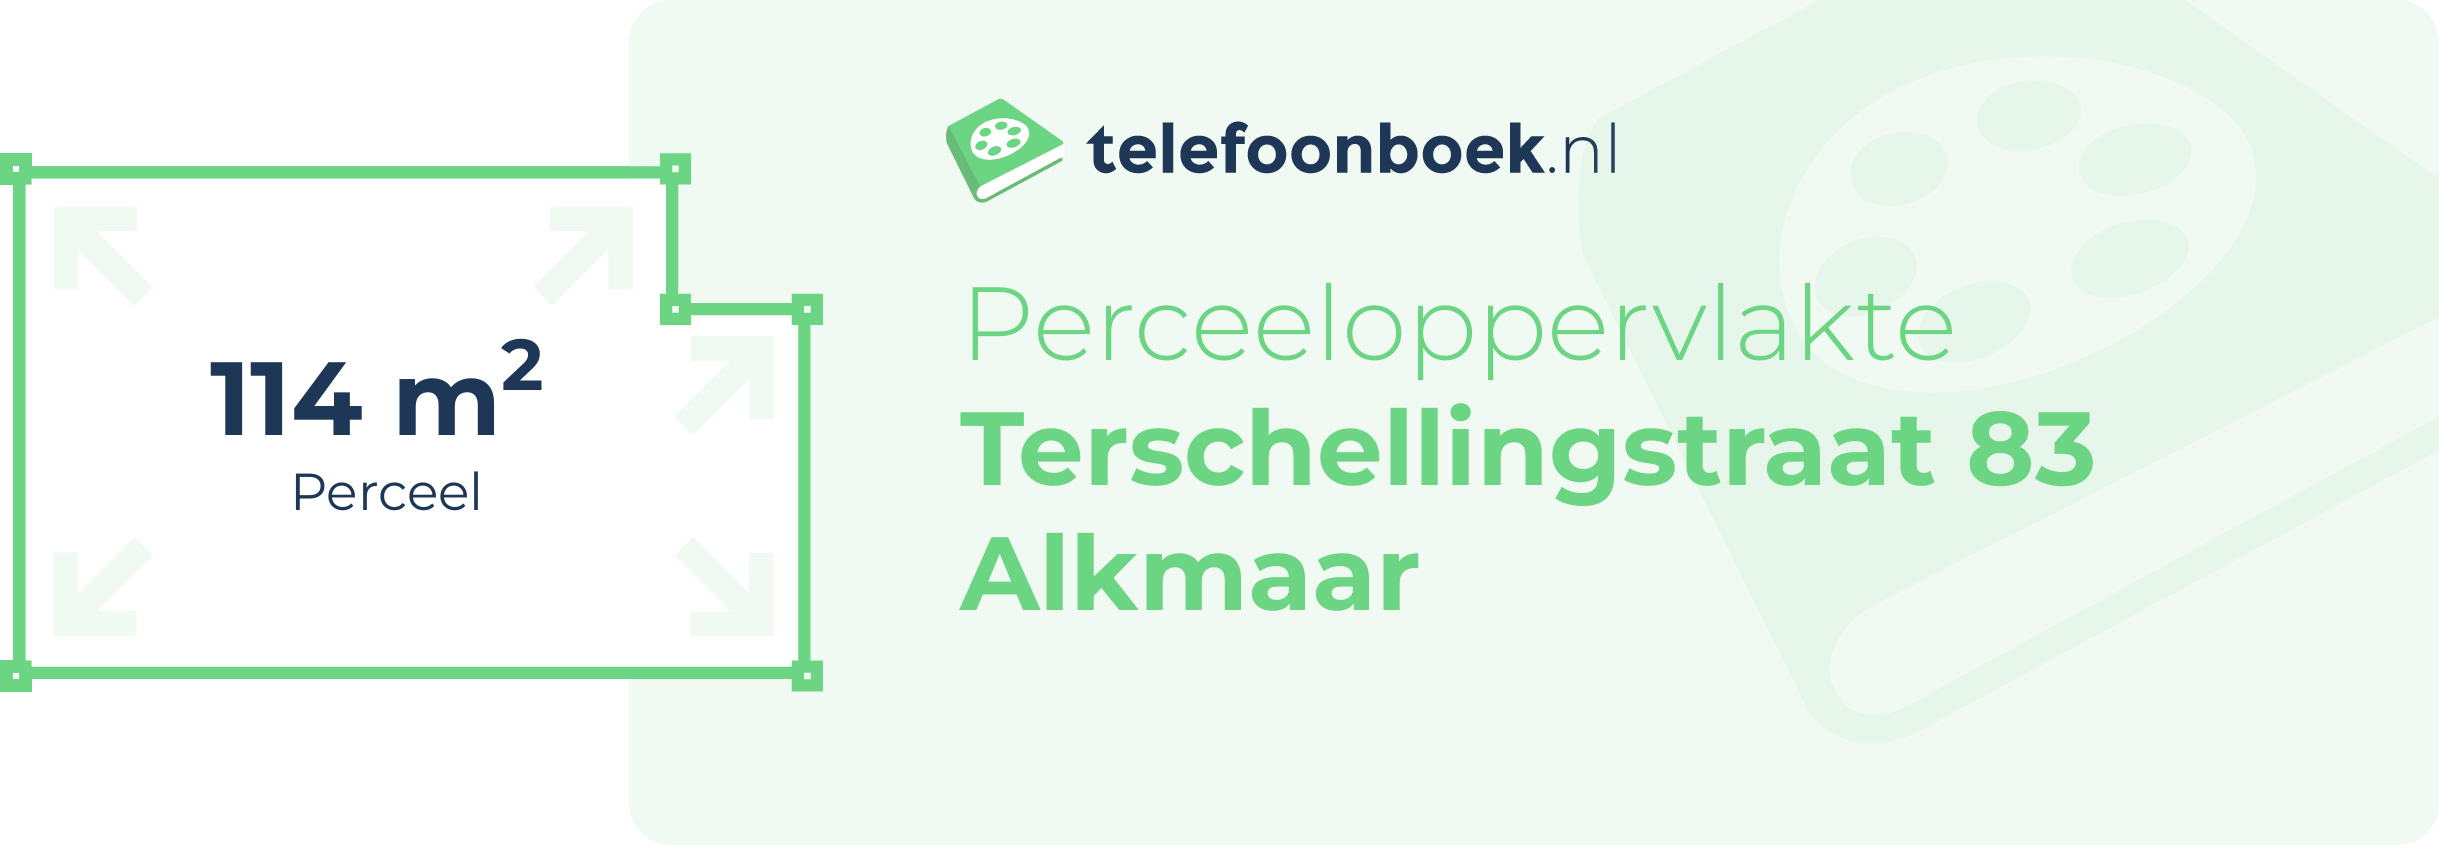 Perceeloppervlakte Terschellingstraat 83 Alkmaar